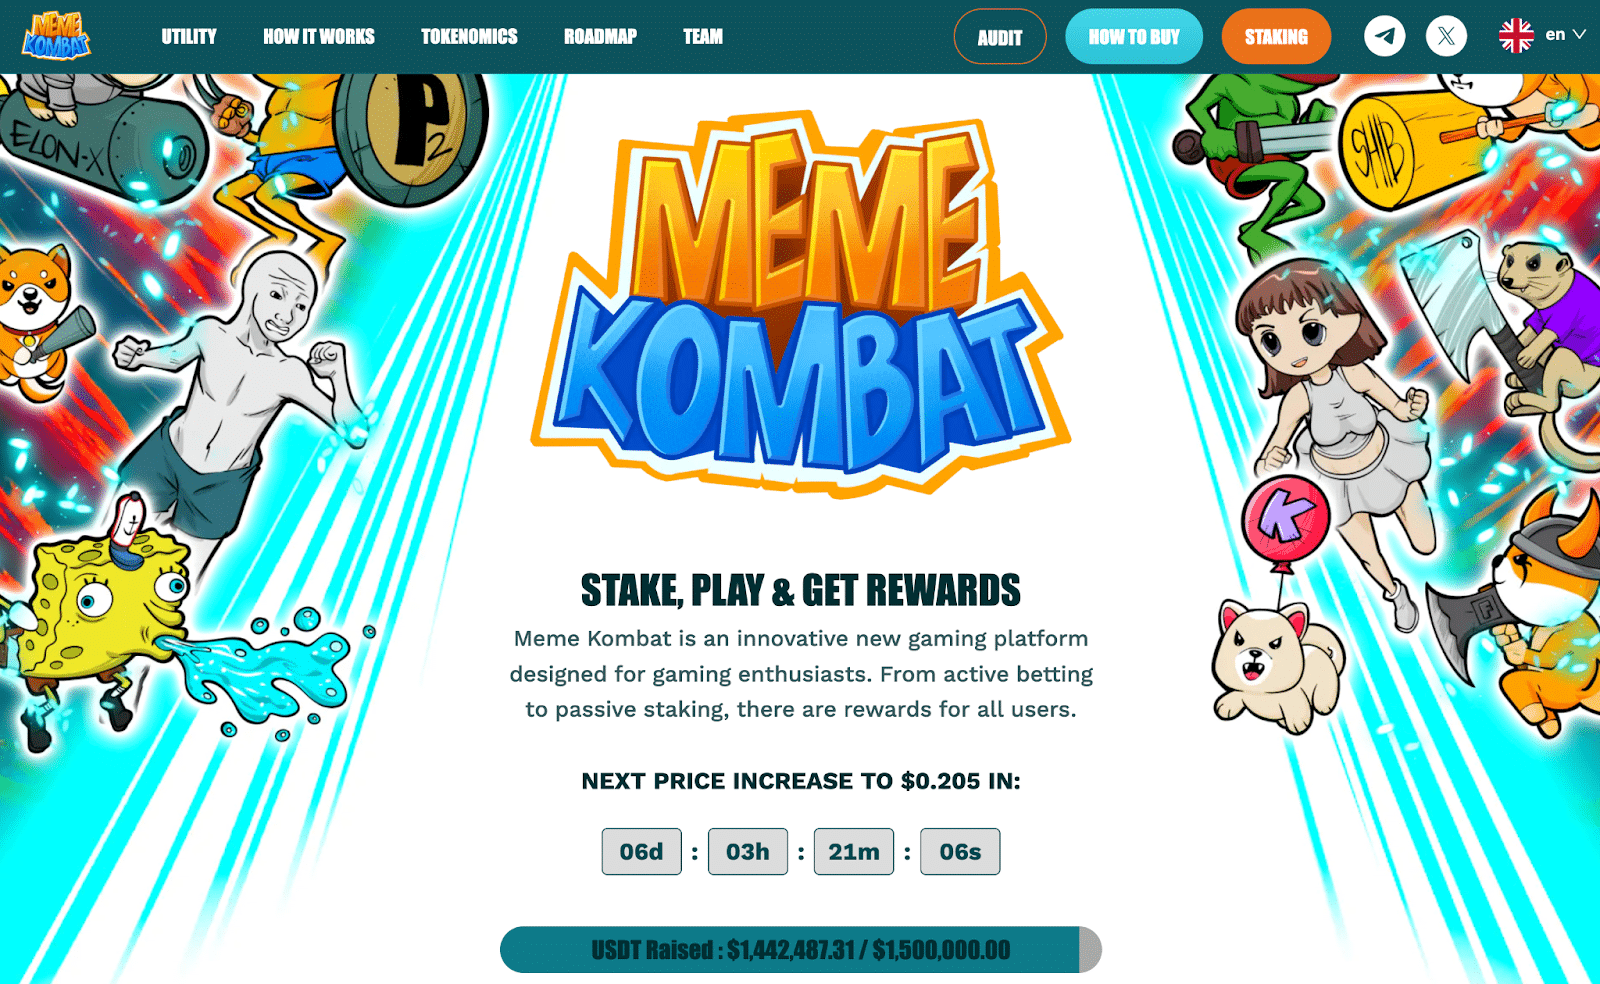 GA黄金甲Pepepe币价格上涨25%Meme Kombat在独特的游戏平台上筹集了近150万美元　也许会有100倍的增加